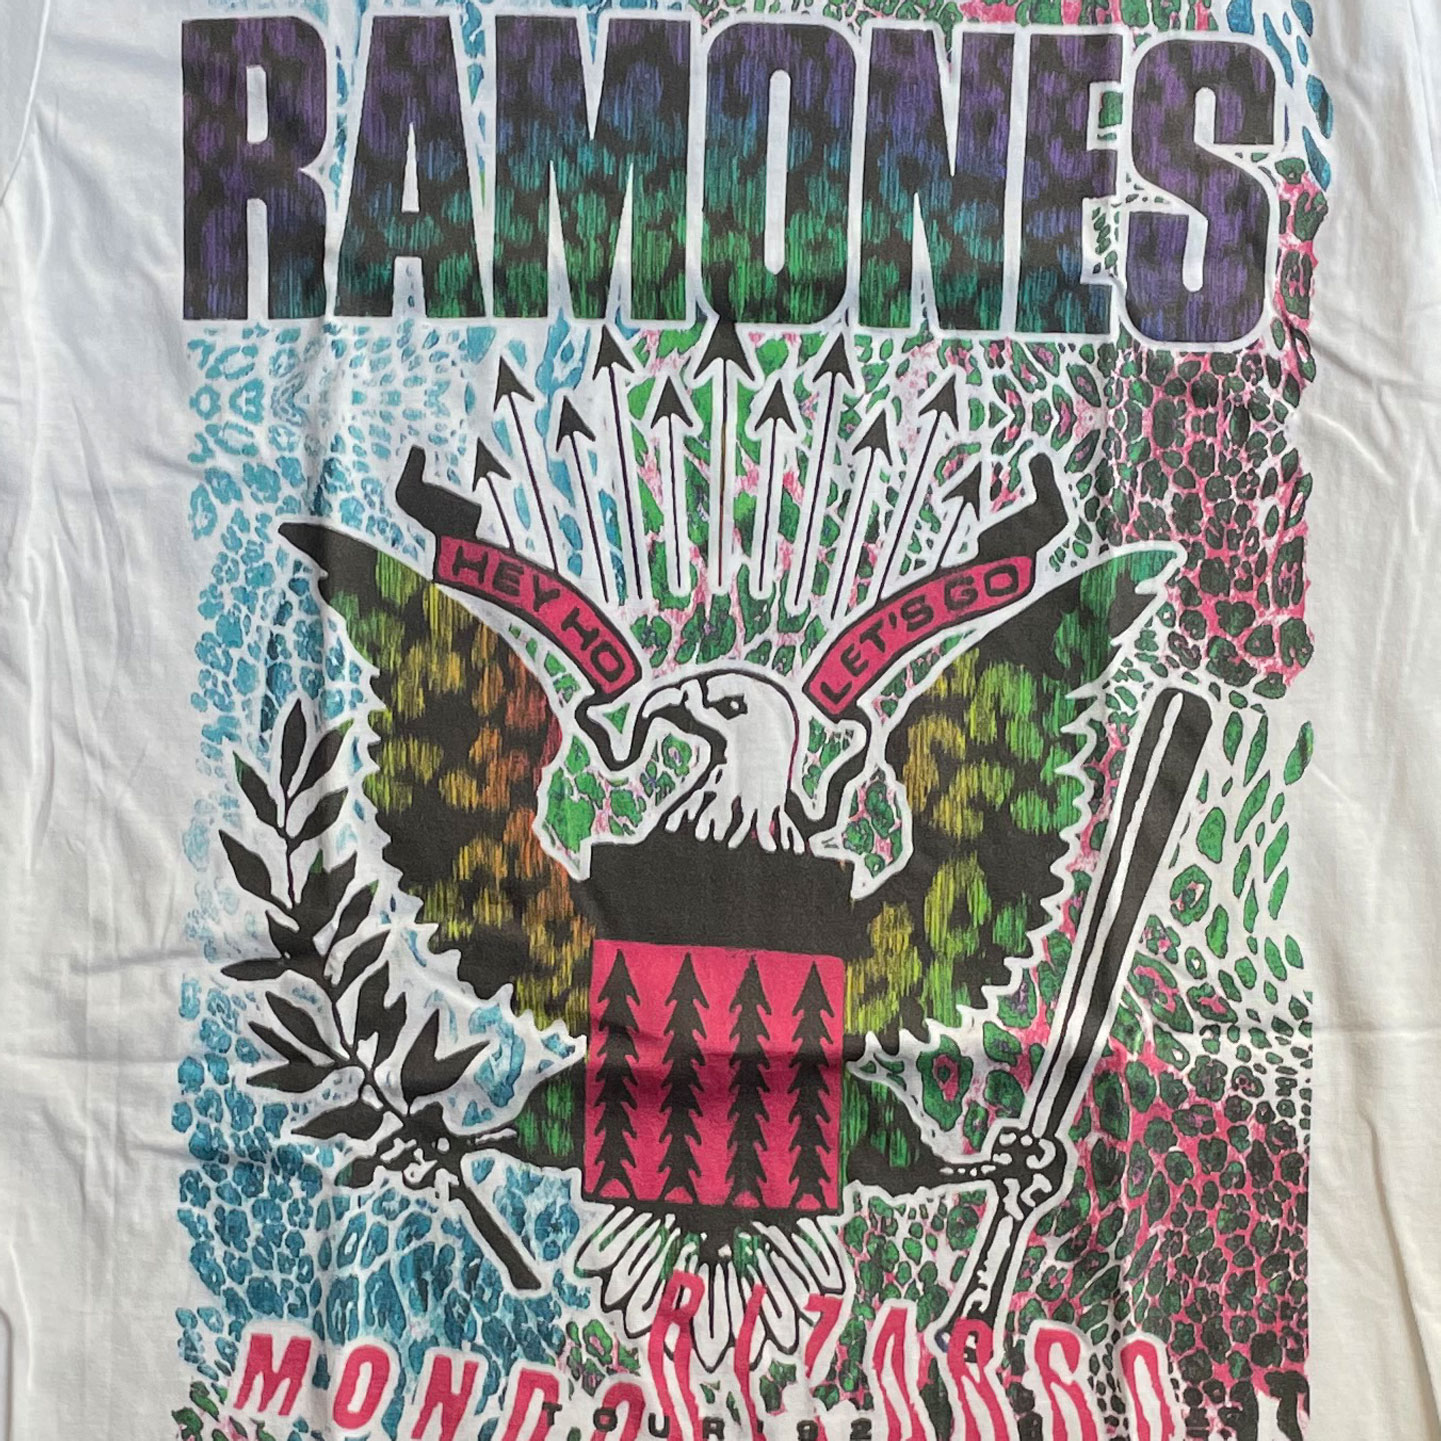 RAMONES Tシャツ Mondo Bizarro Tour オフィシャル